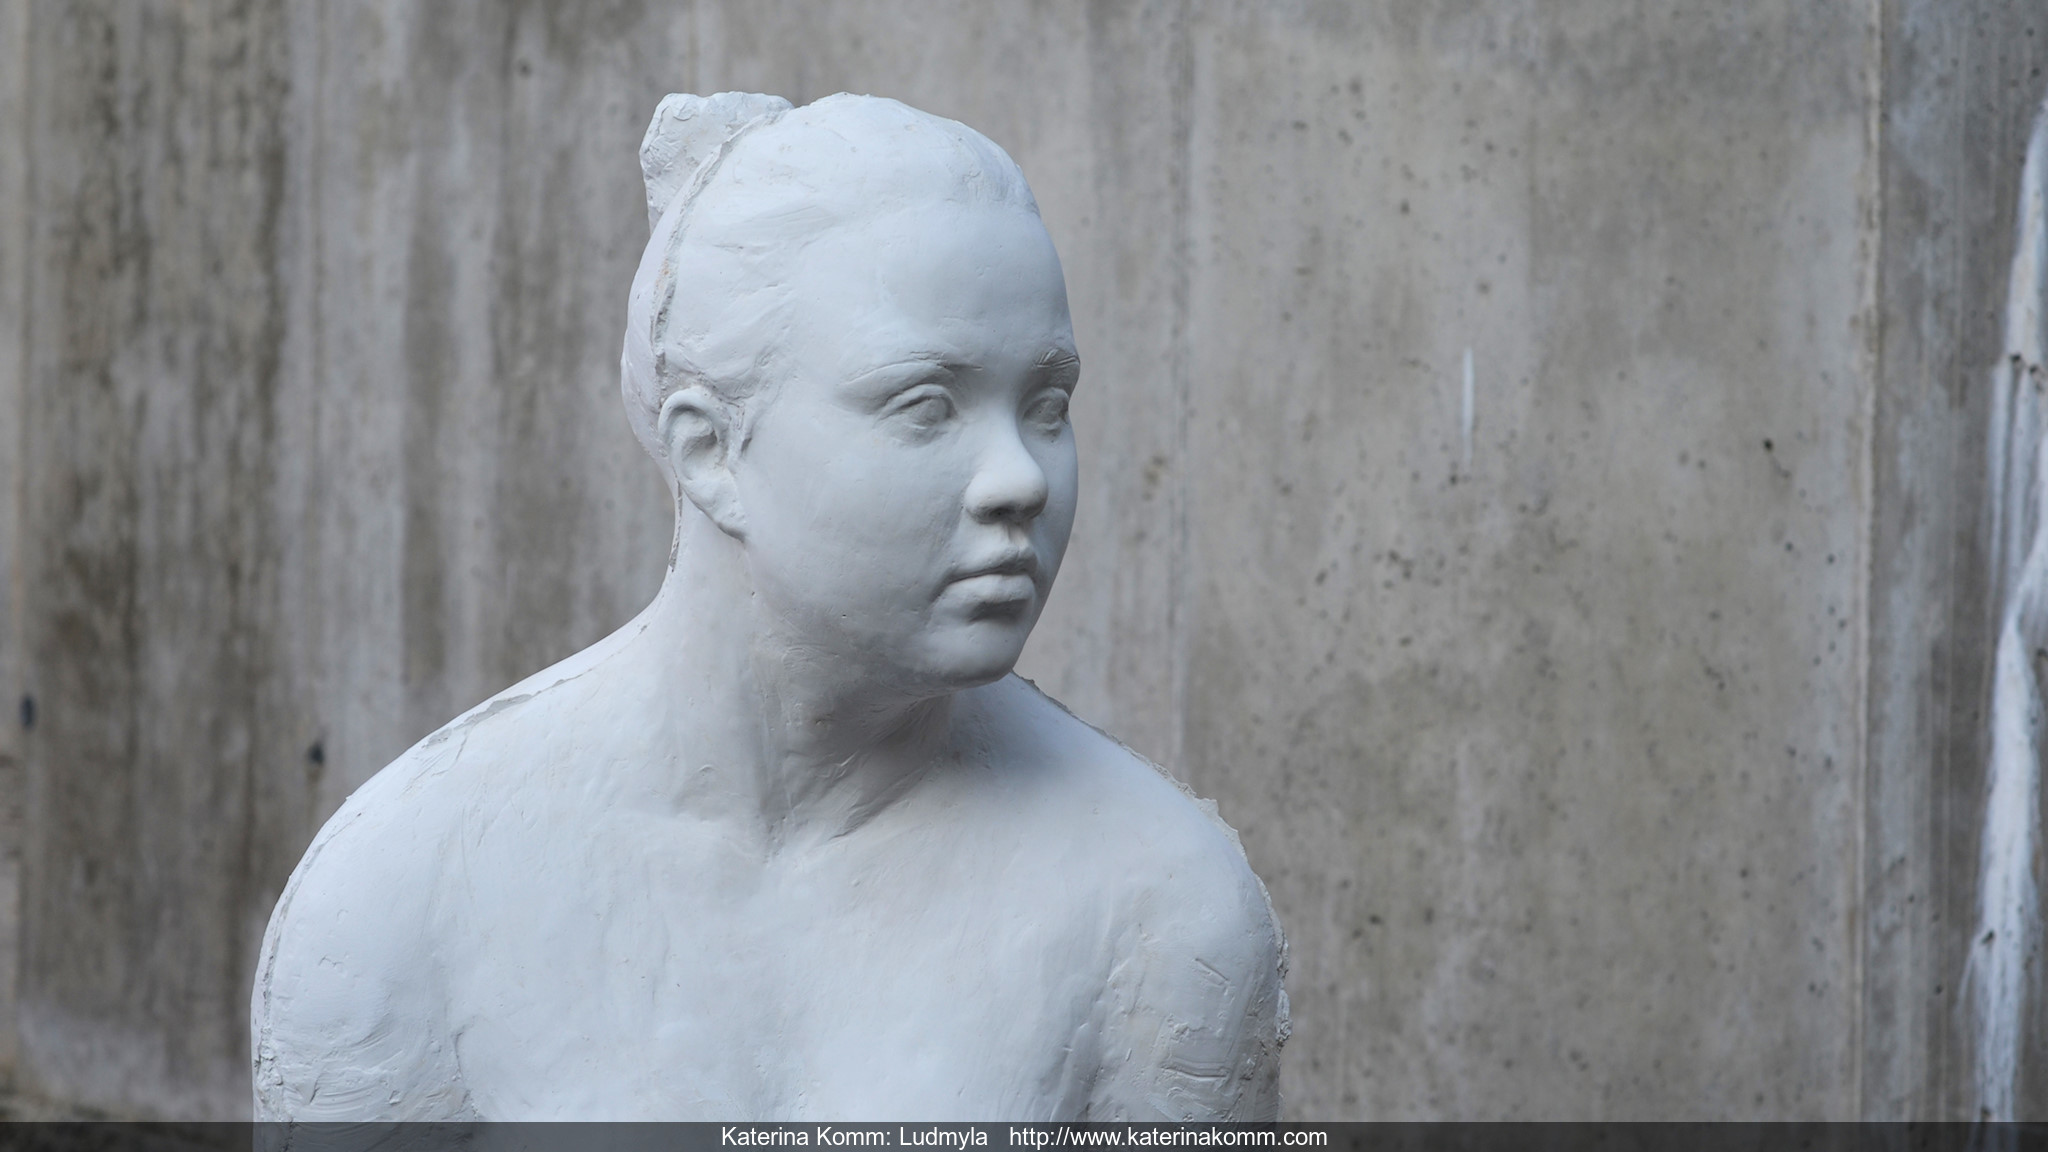 Katerina Komm: sculpture, STUDIES: Ludmyla